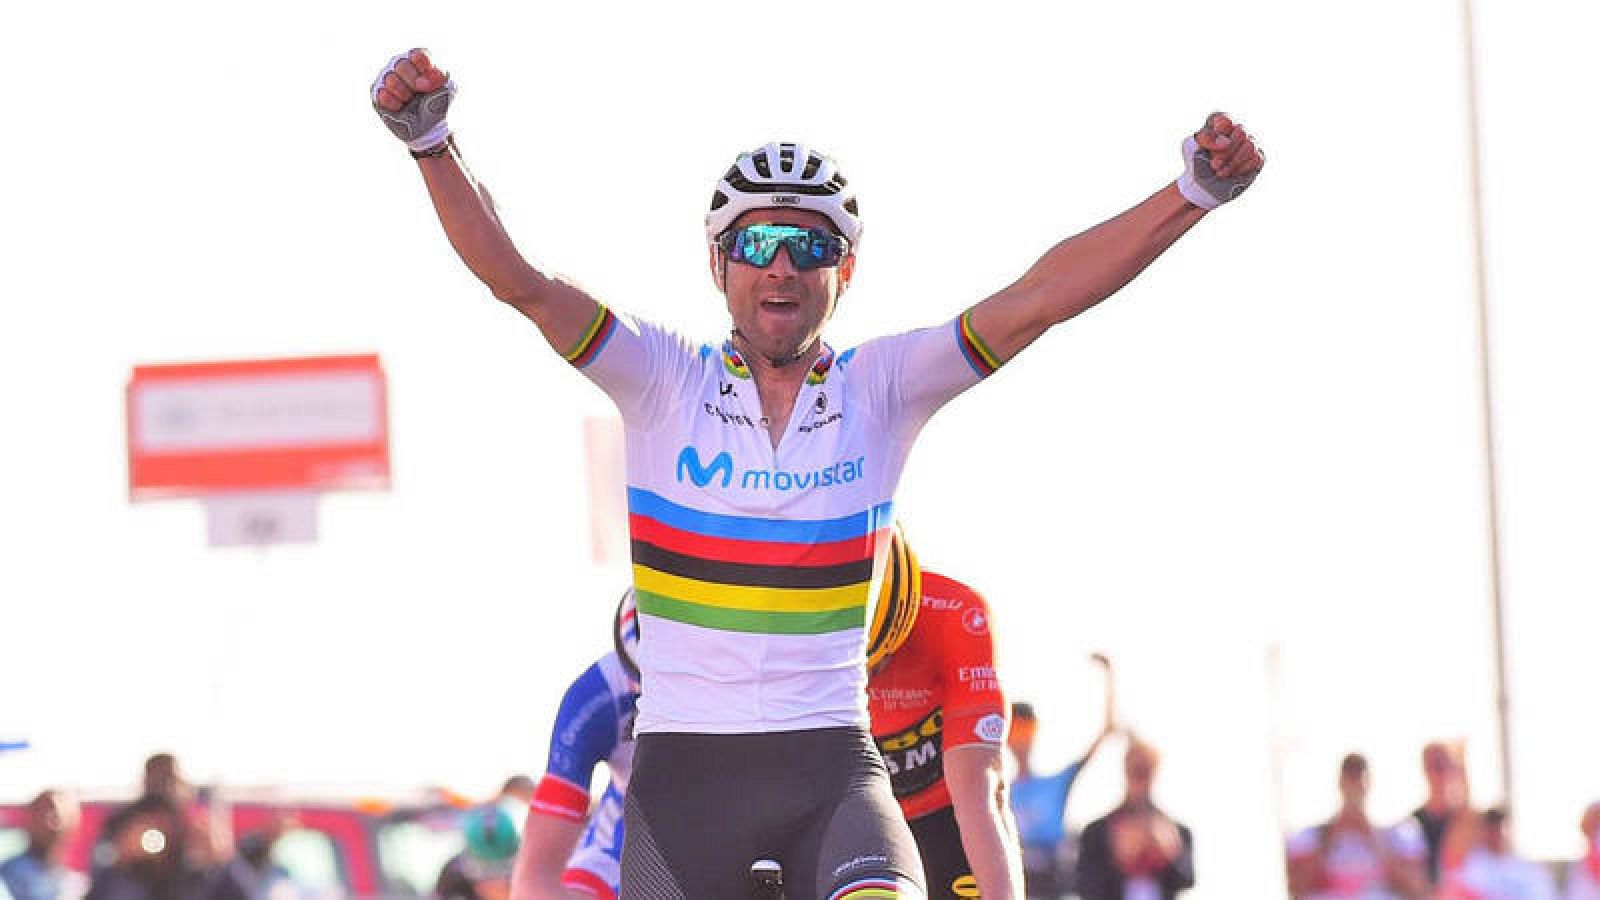 Alejandro lucirá el dorsal número de Vuelta 2019